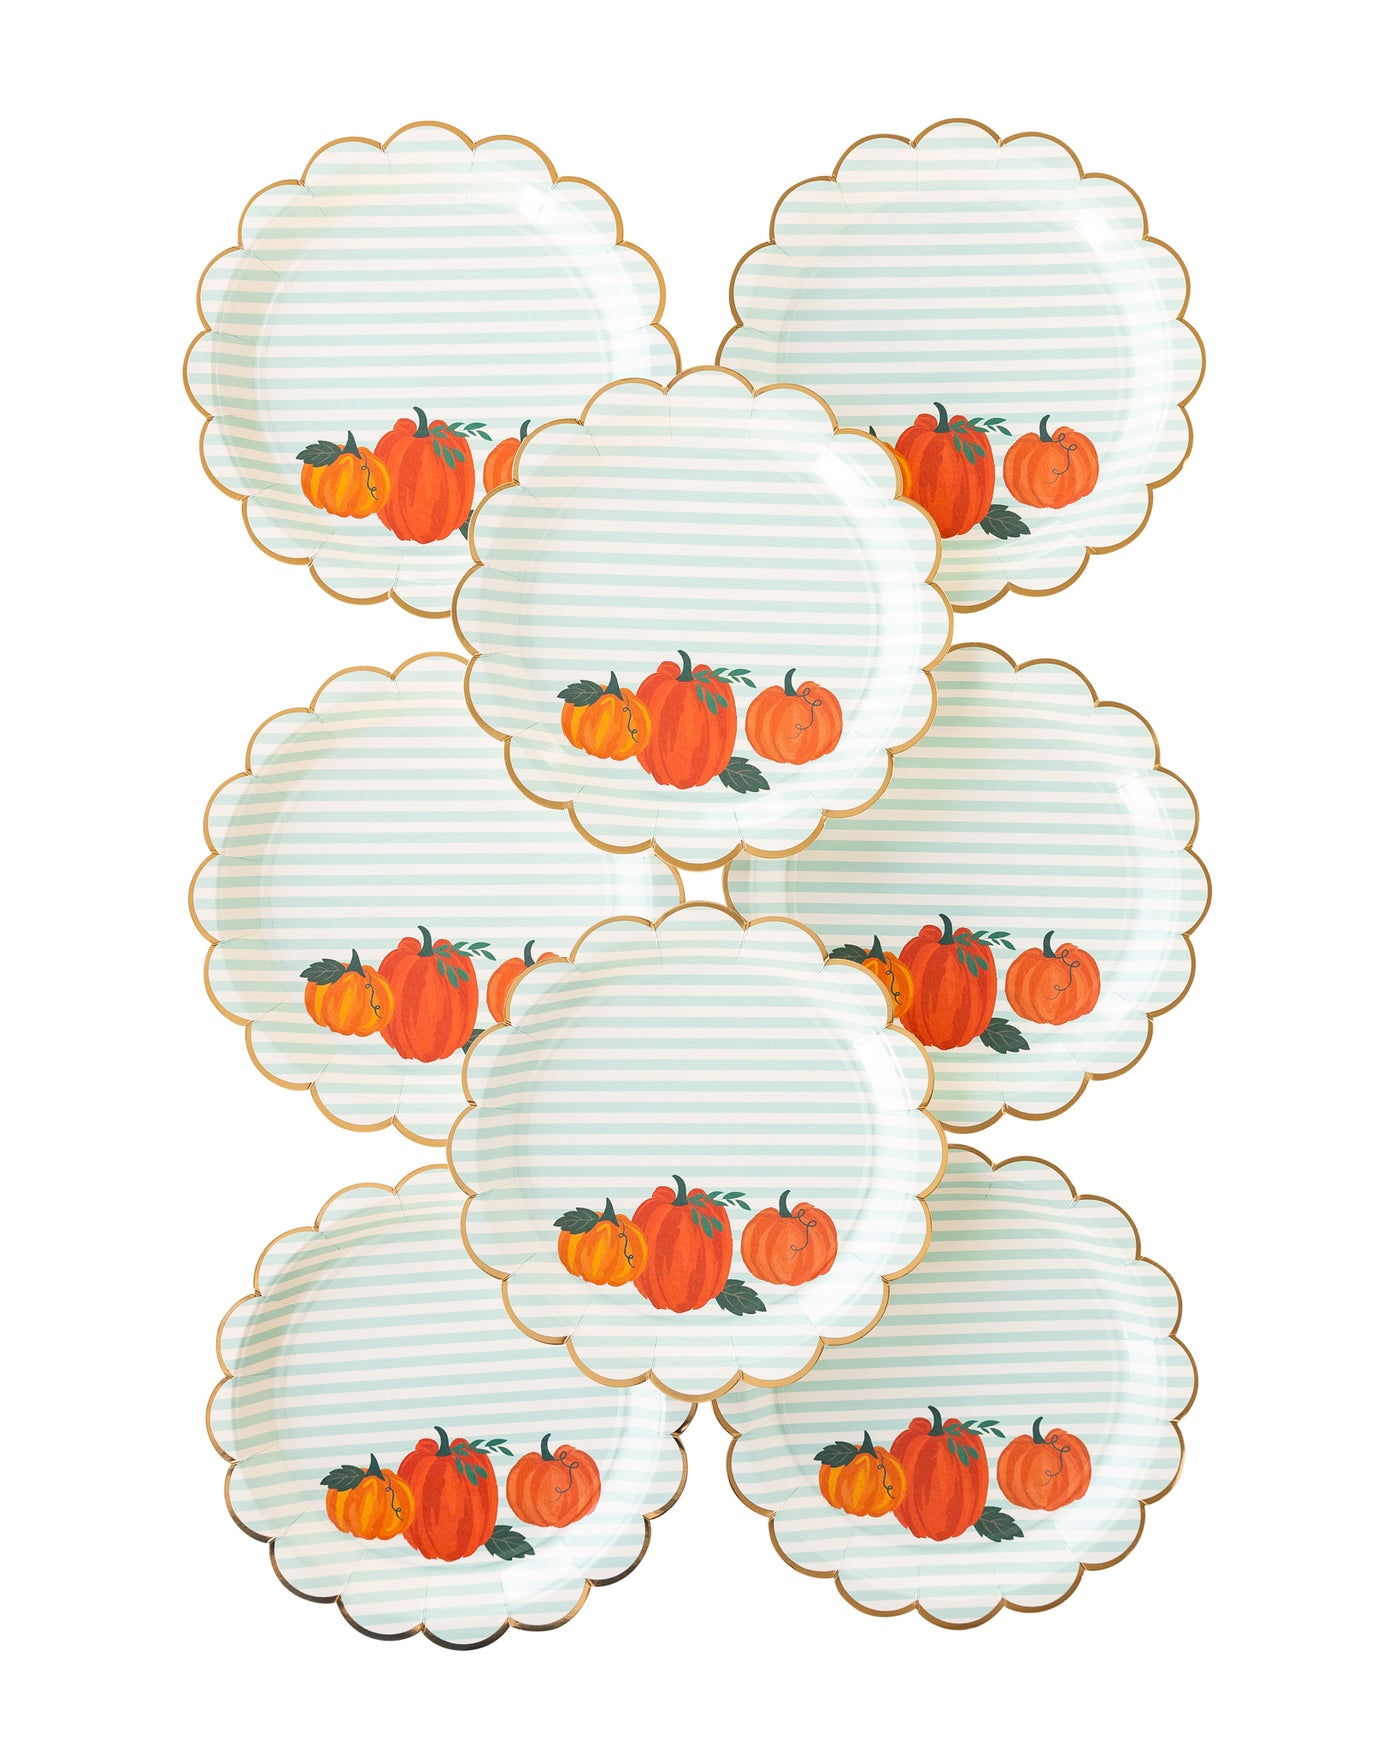 PLTS343D - Pumpkin Stripes Plates